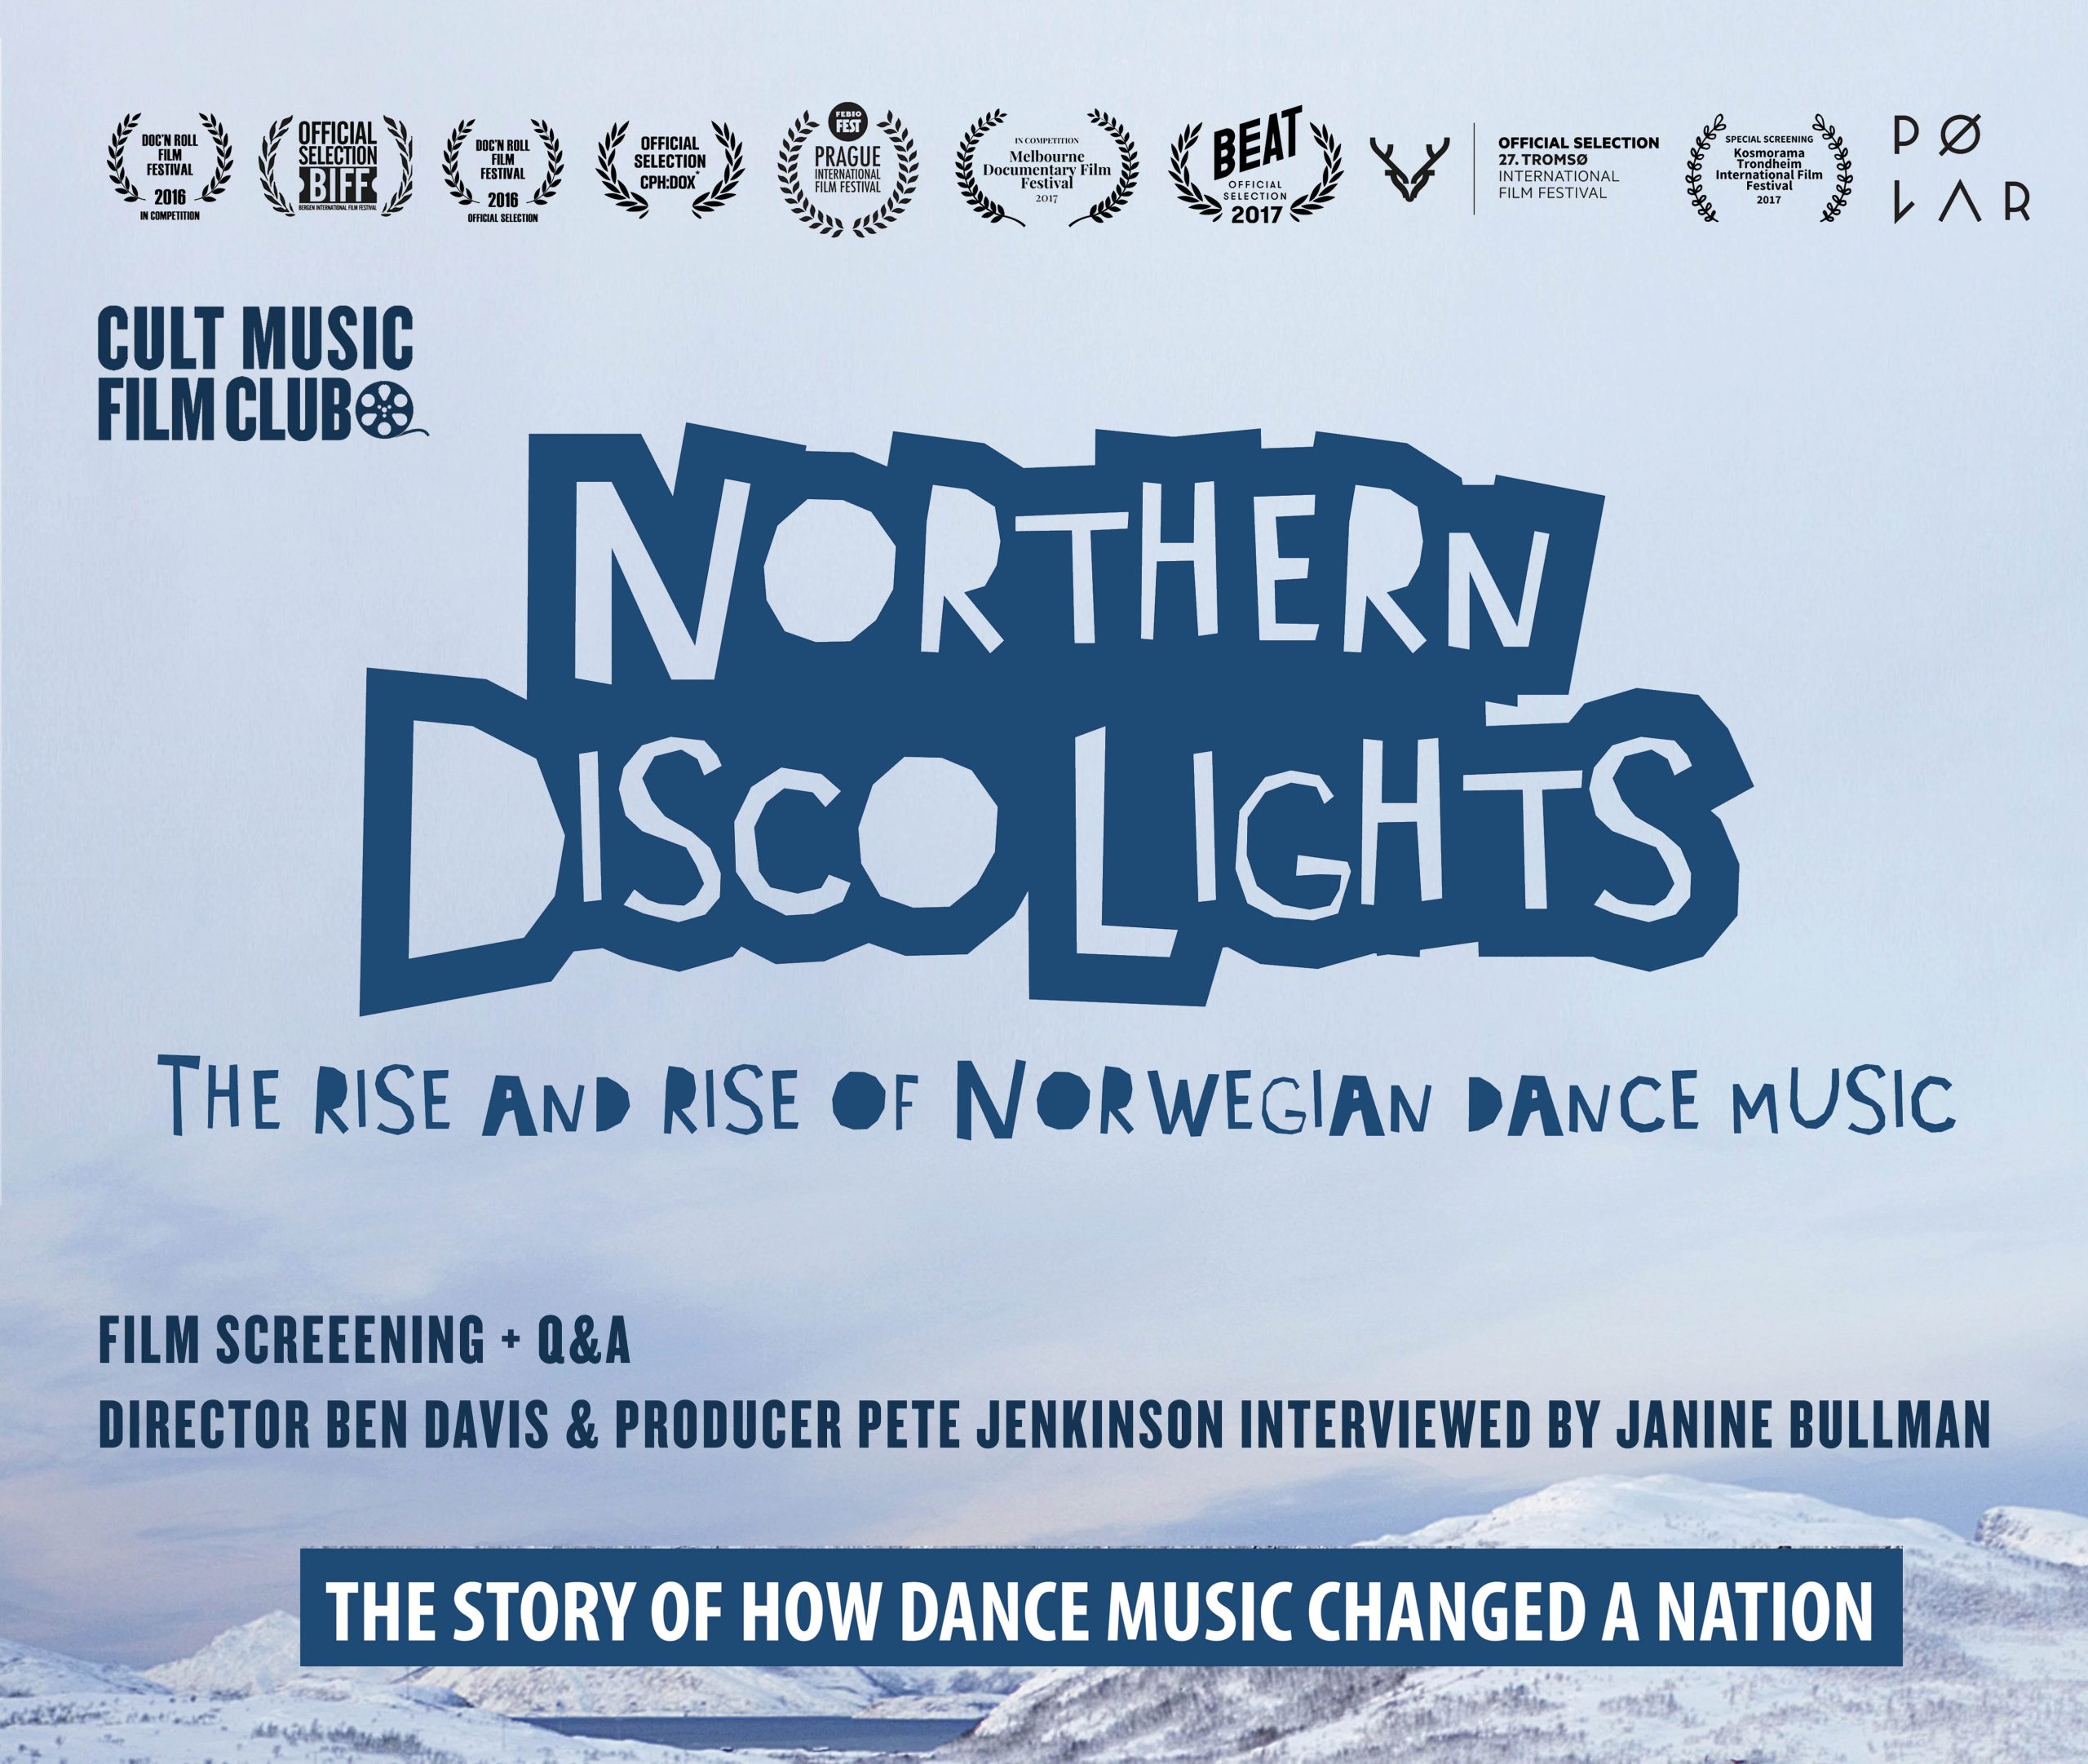 Northern Disco Lights Film Screening